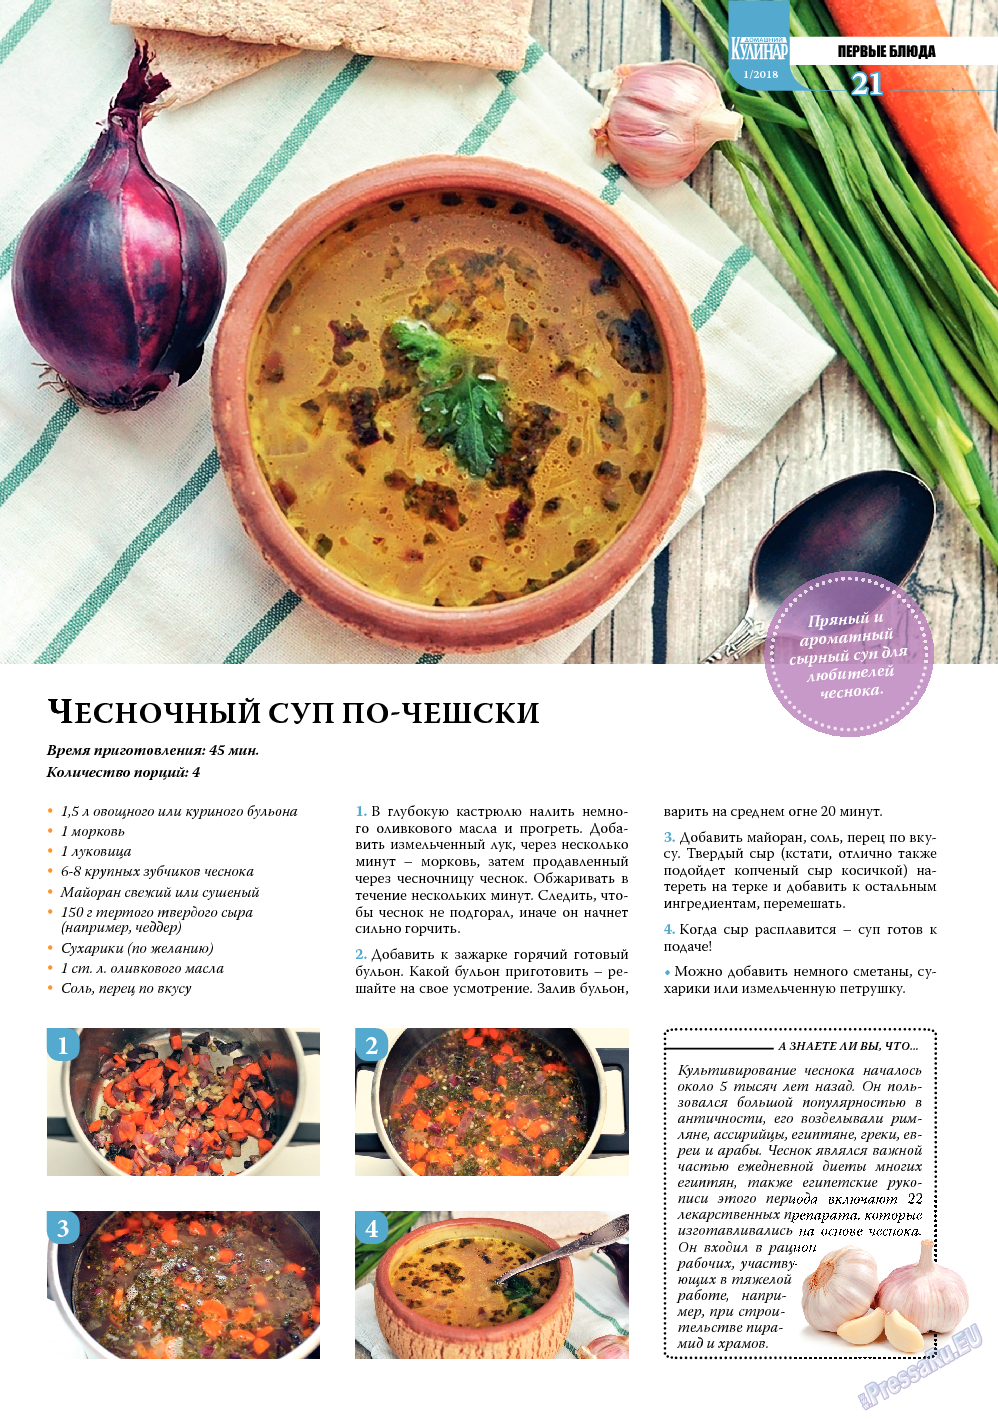 Домашний кулинар (журнал). 2018 год, номер 1, стр. 21